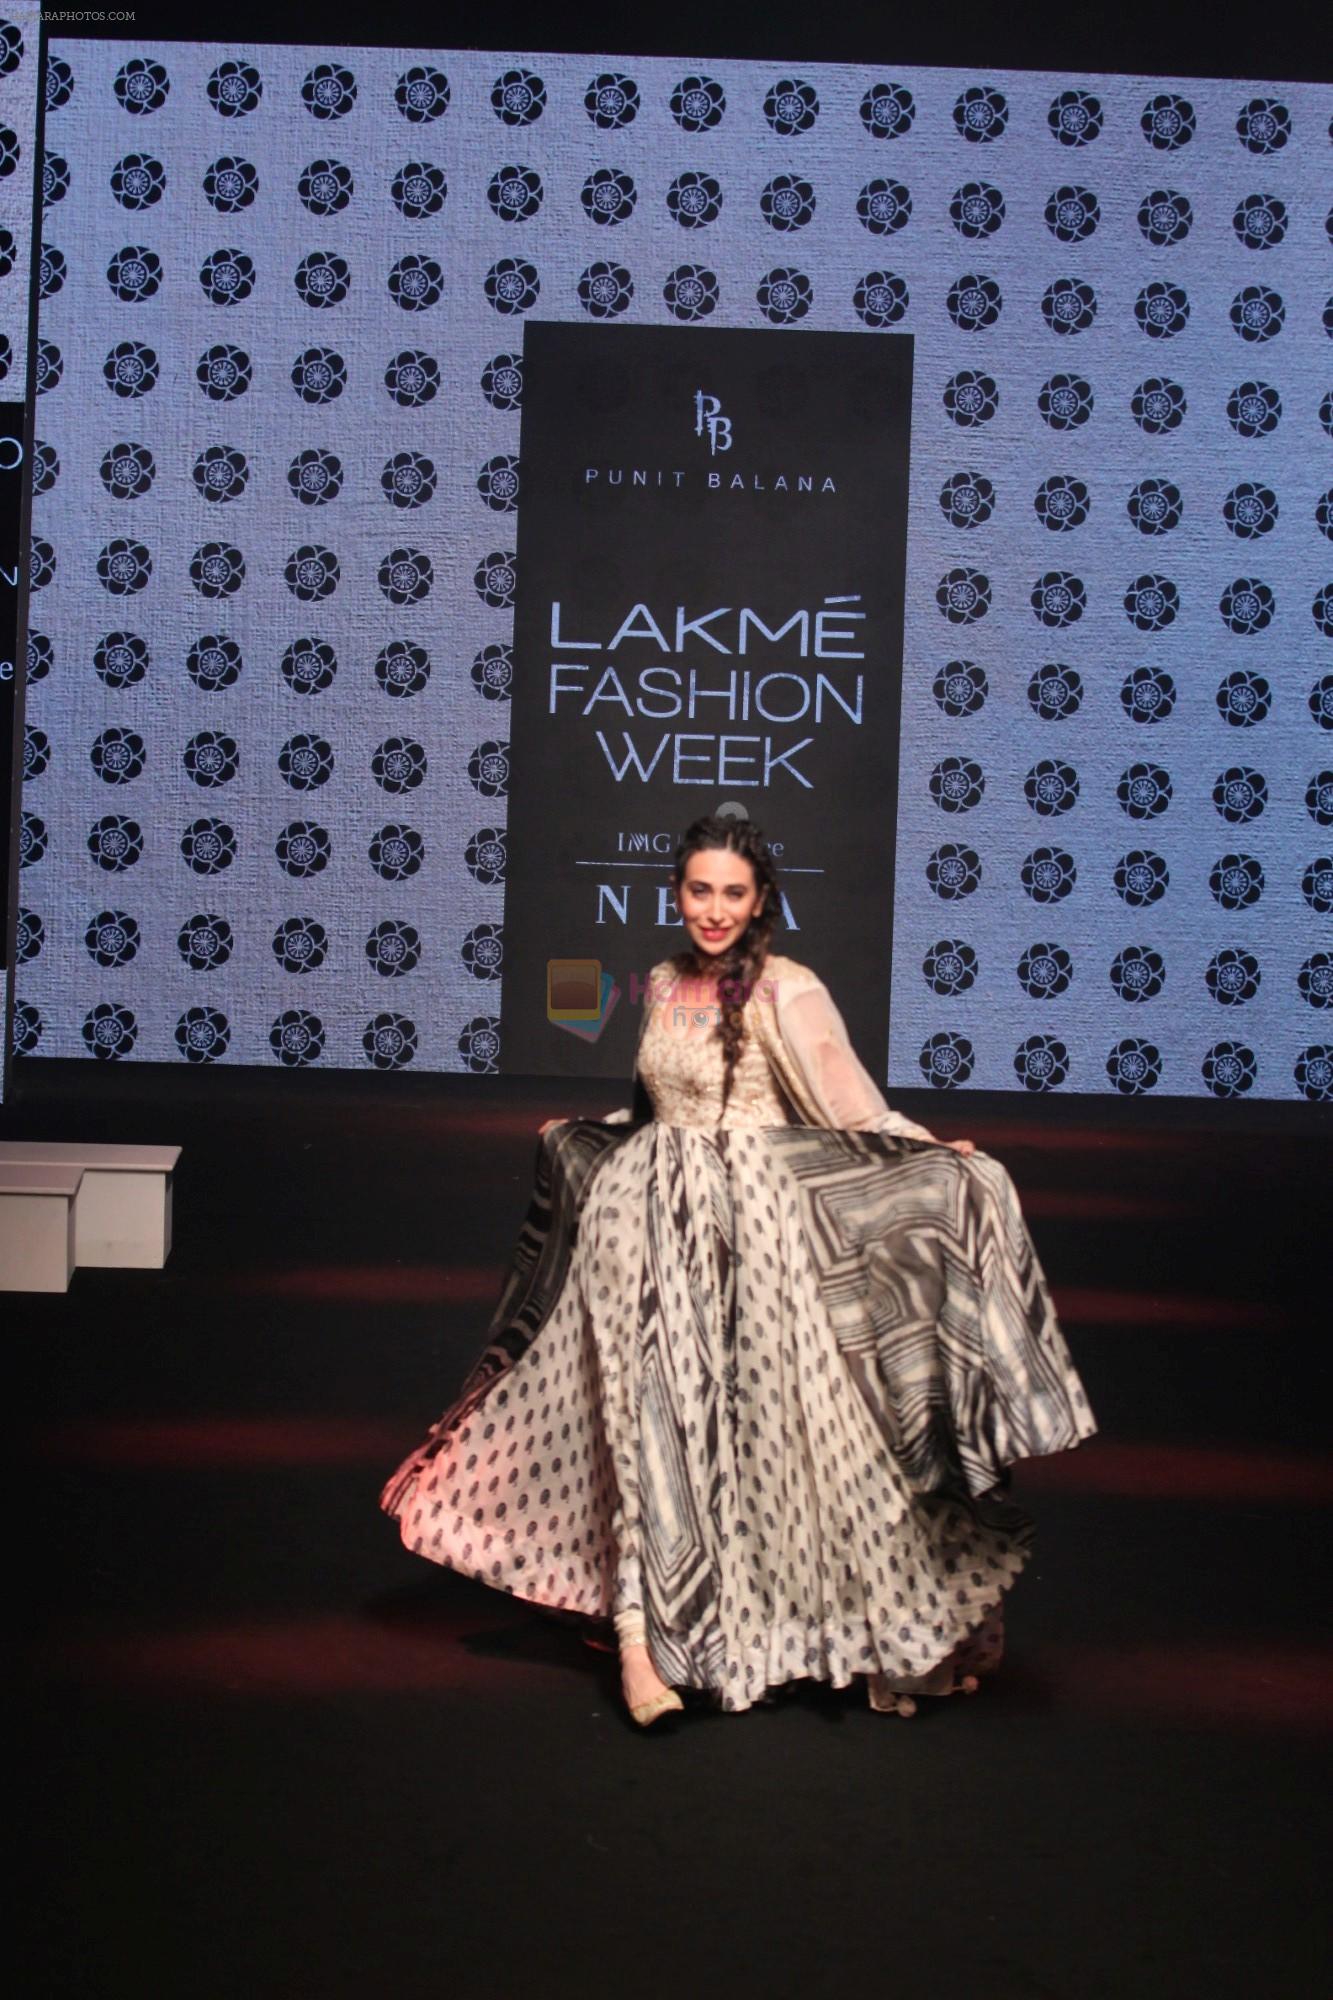 Karisma Kapoor walk the Ramp on Day 5 at Lakme Fashion Week 2019 on 3rd Feb 2019